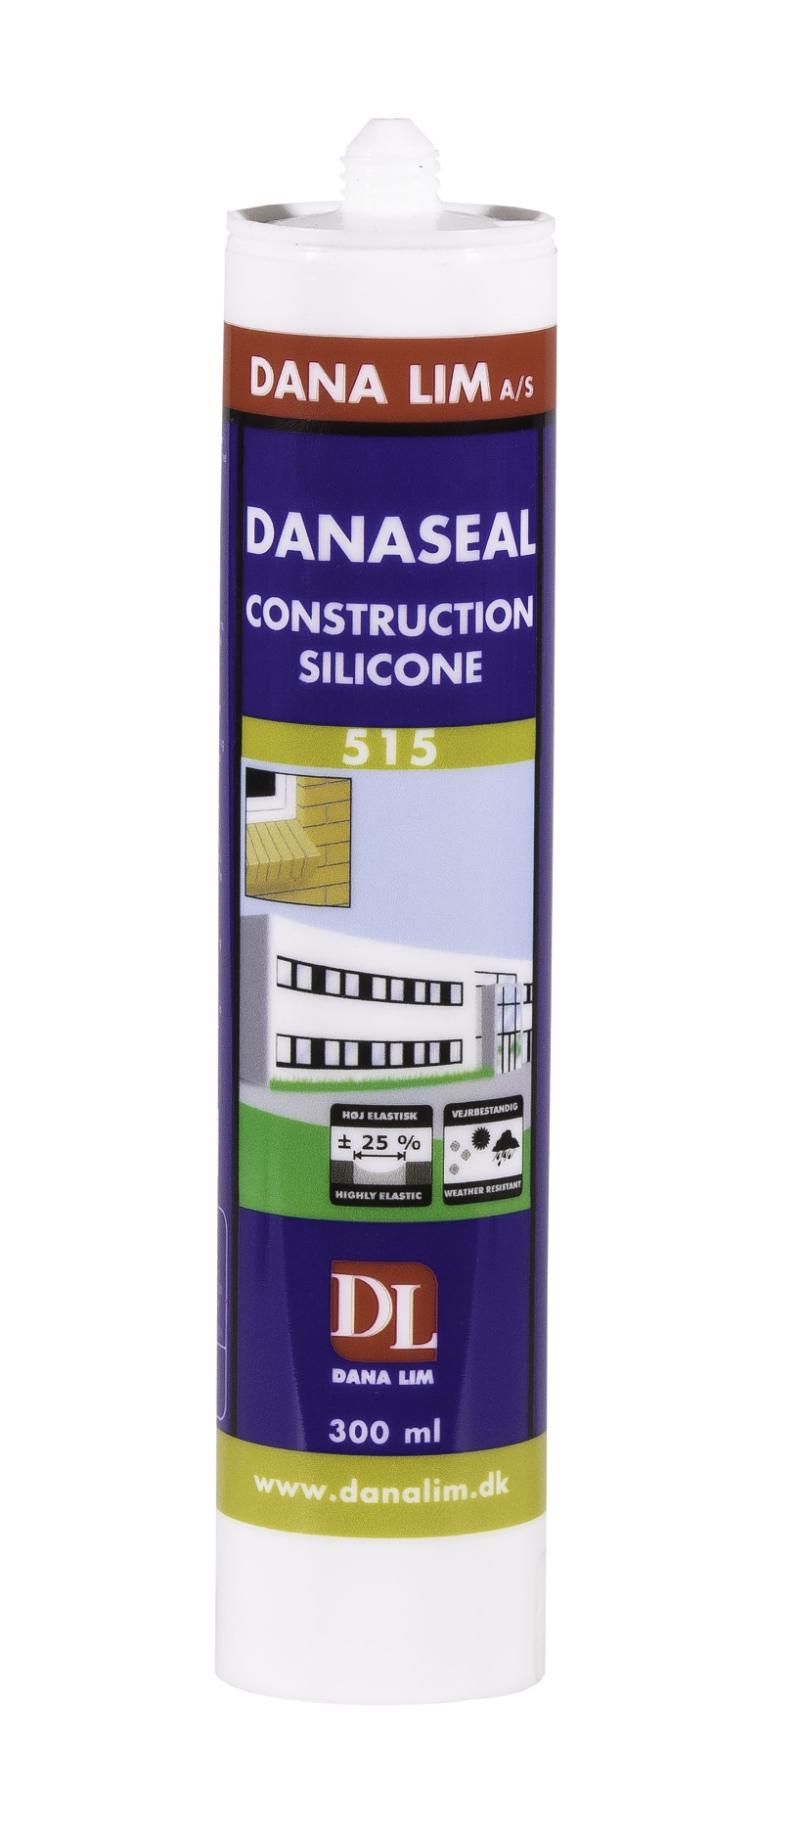 Dana Construction silicone 515, 300 ml cartridge